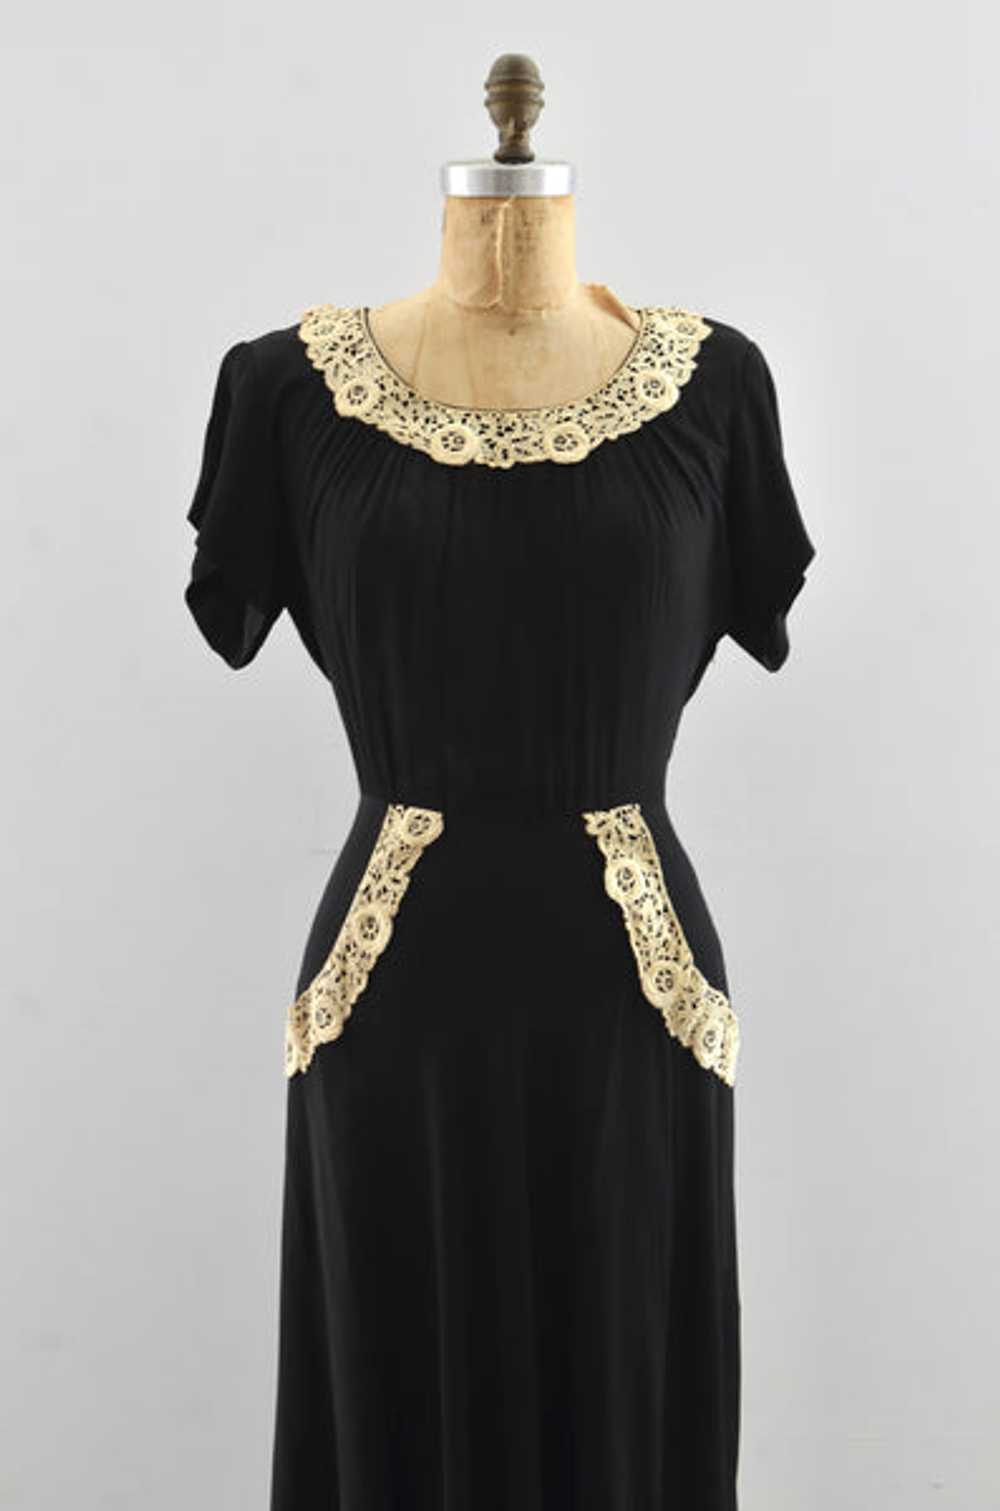 Vintage 1940's Noir Dress - image 2